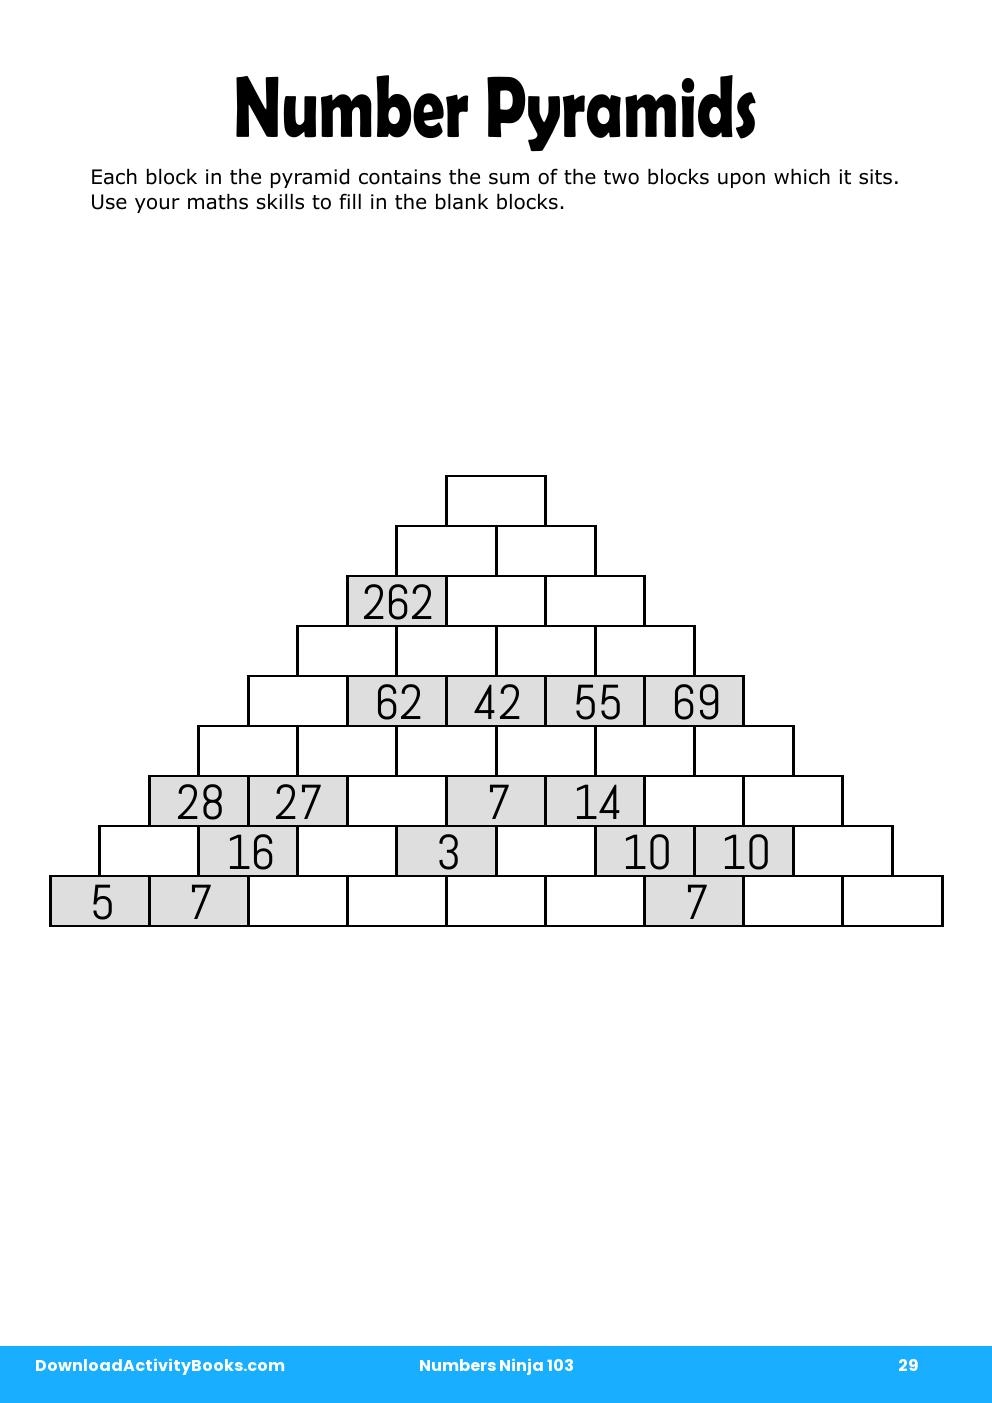 Number Pyramids in Numbers Ninja 103